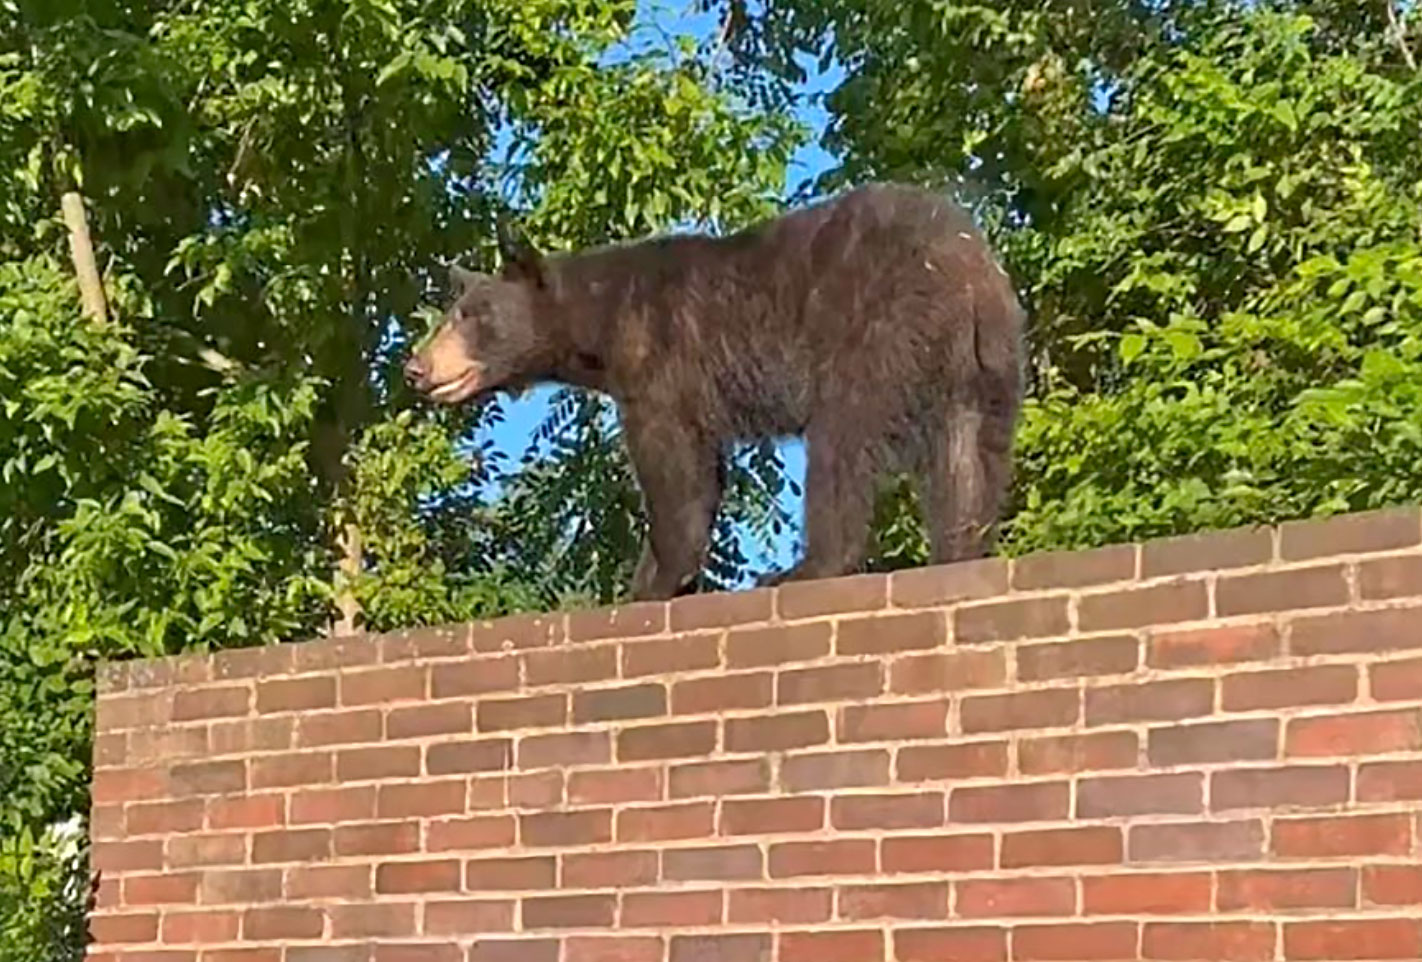 Bear spotted casually walking around Arlington today | ARLnow